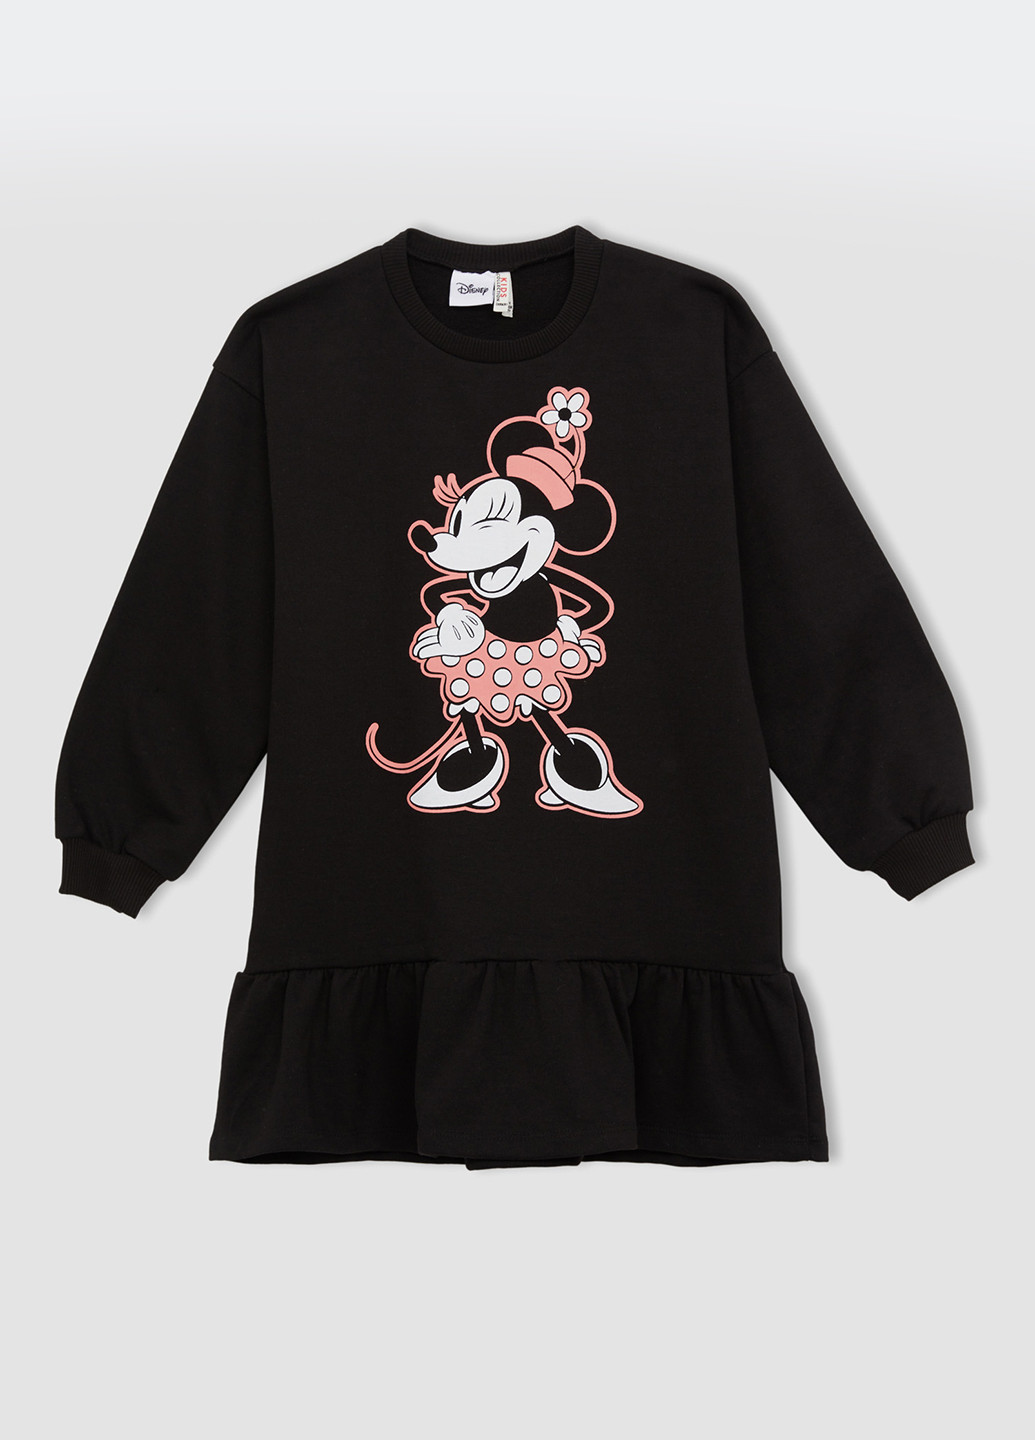 Черное кэжуал mickey & minnie (standard characters) клеш, платье-свитшот DeFacto персонажи